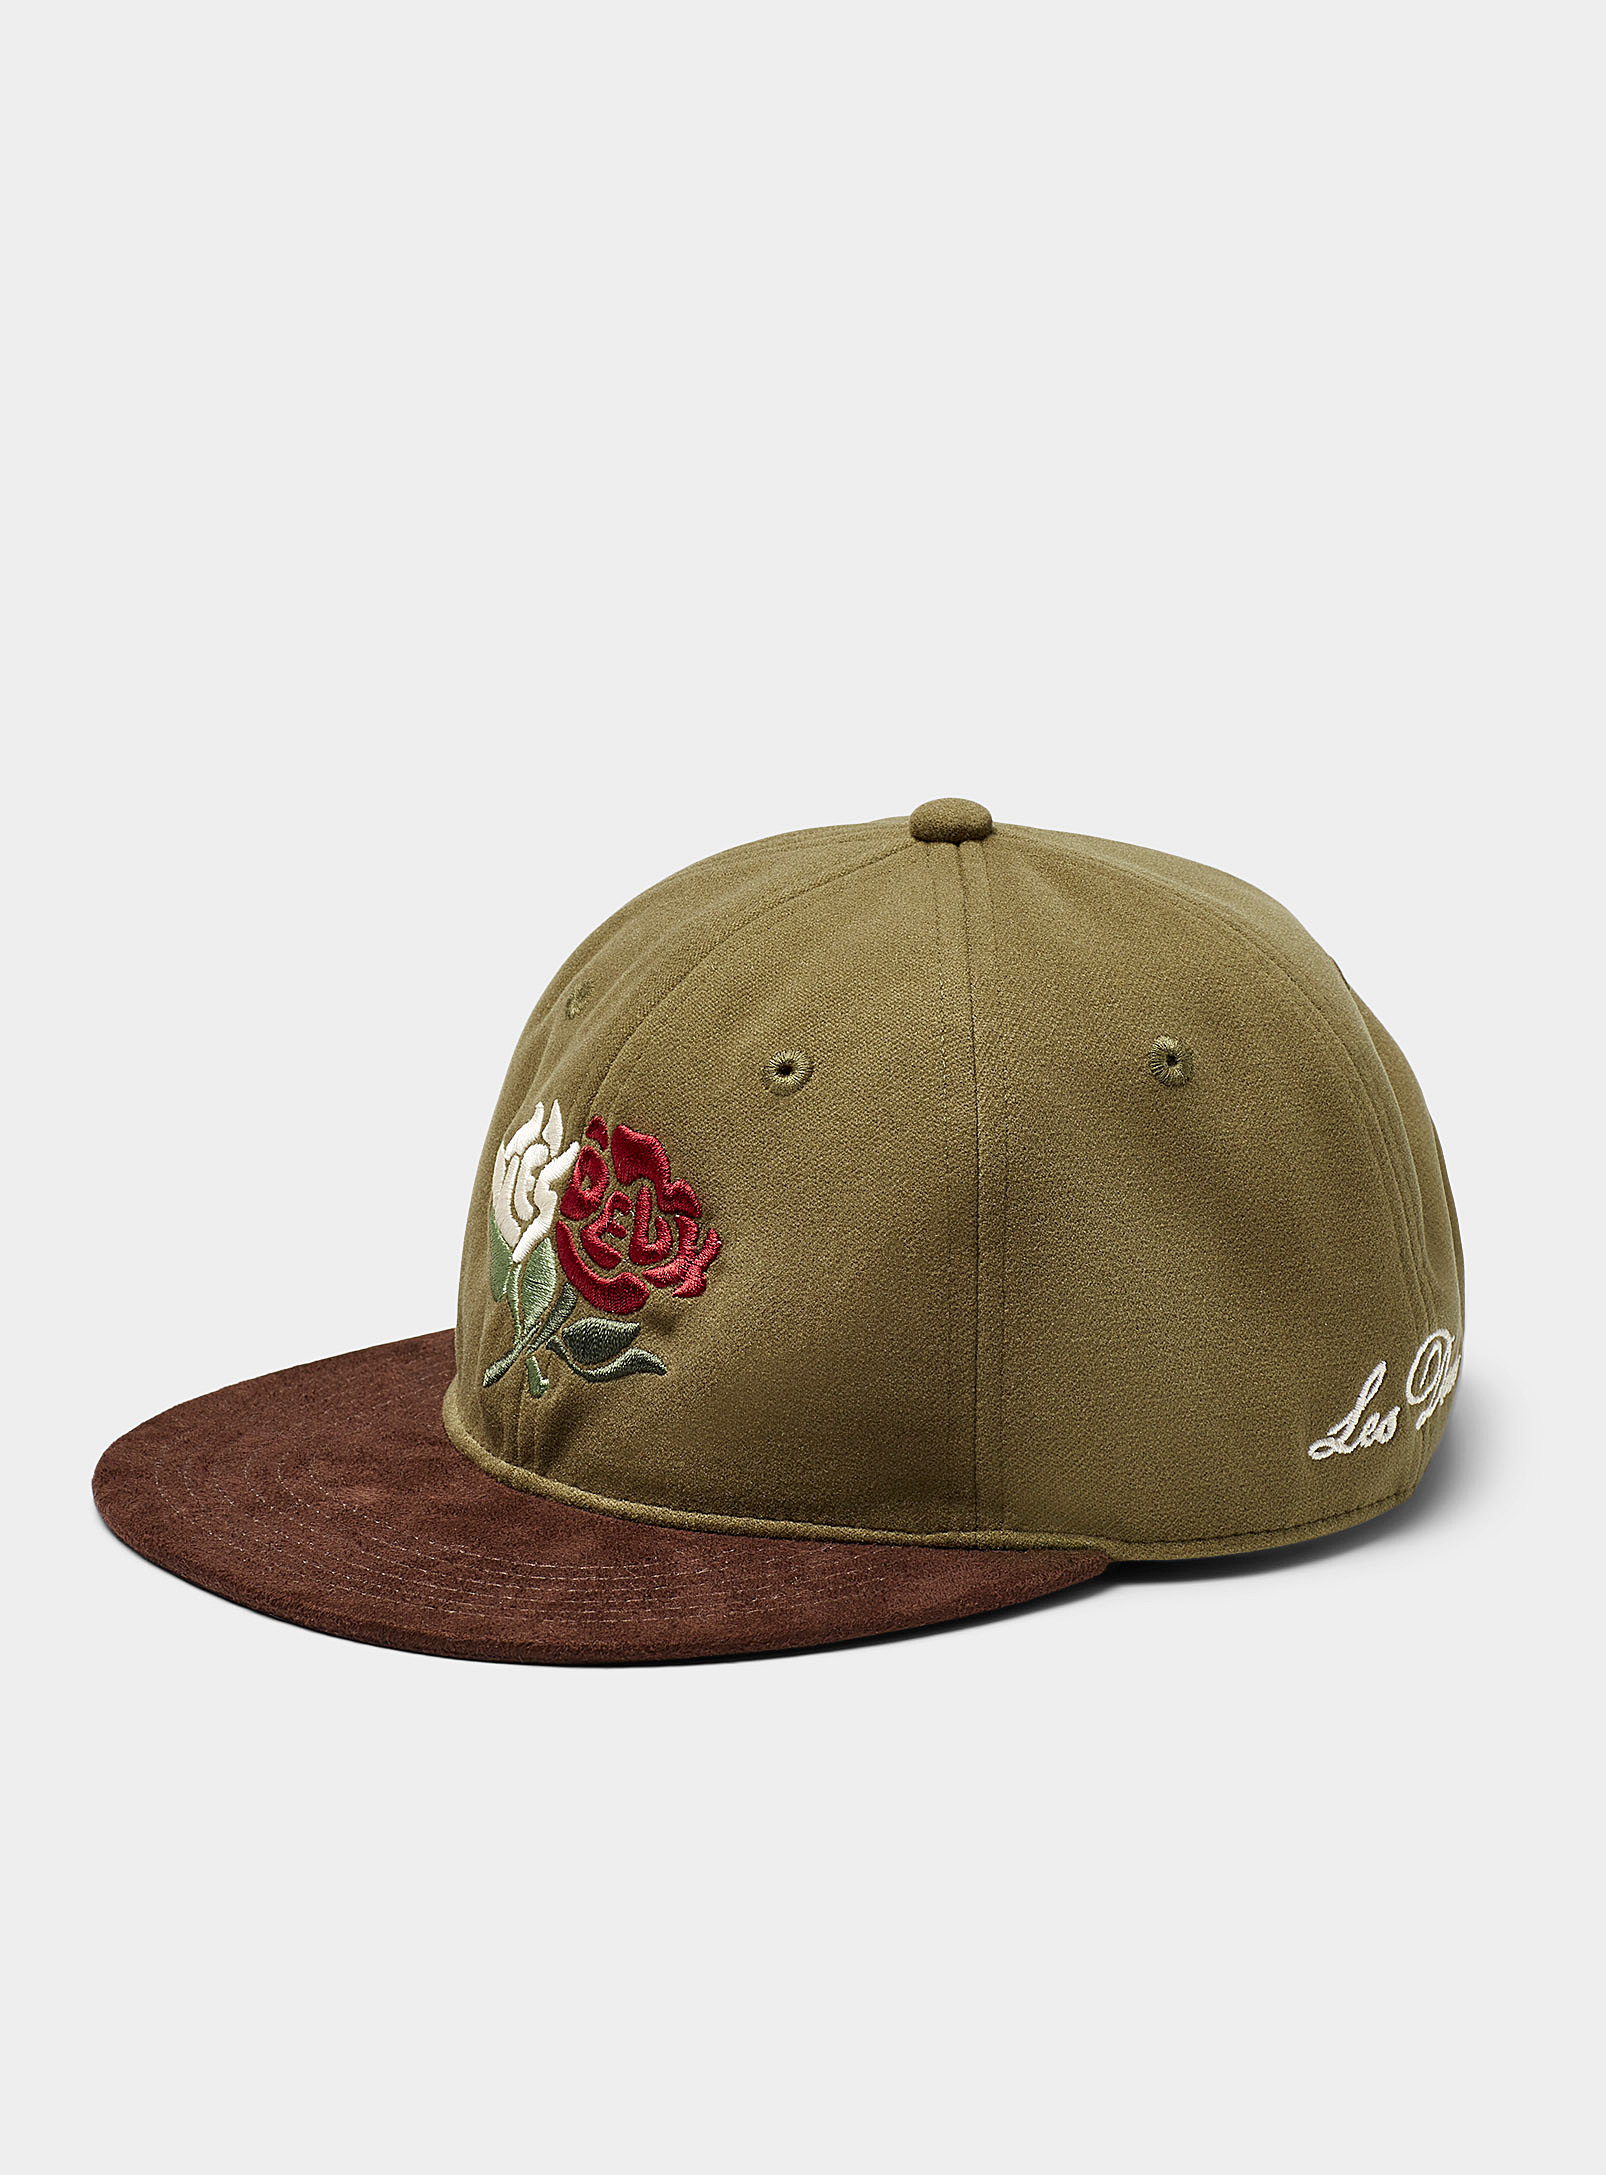 Les Deux - Men's Floral logo suede visor baseball cap